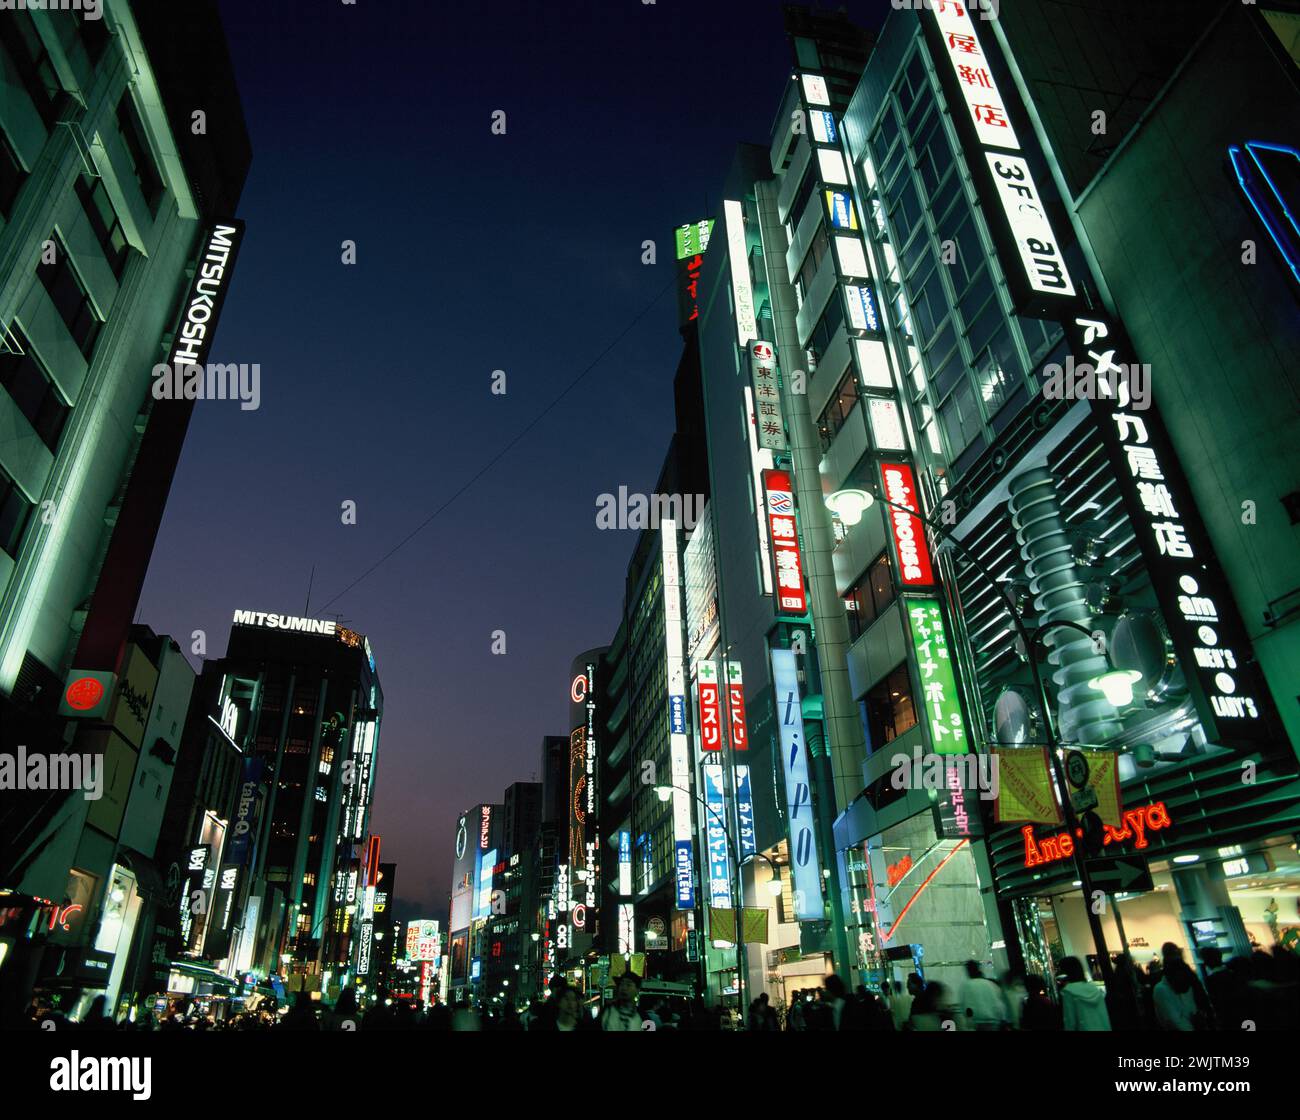 Japan. Tokyo. Shinjuku district. Busy street scene with bright lights at night. Stock Photo